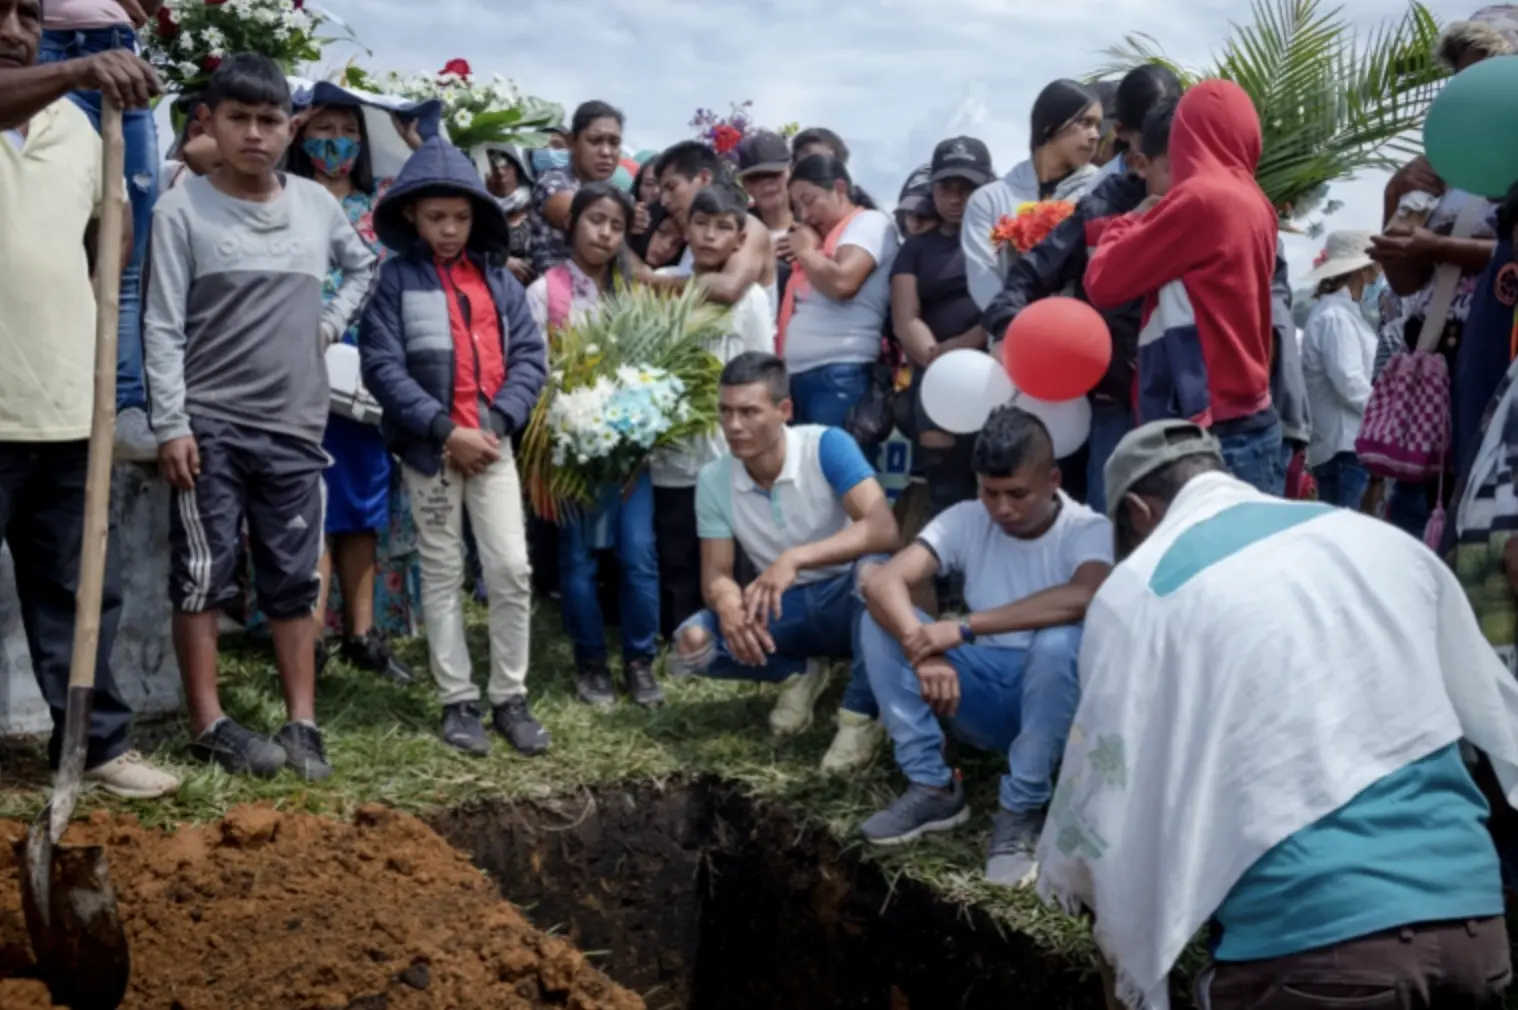 Relatives look down at burial 